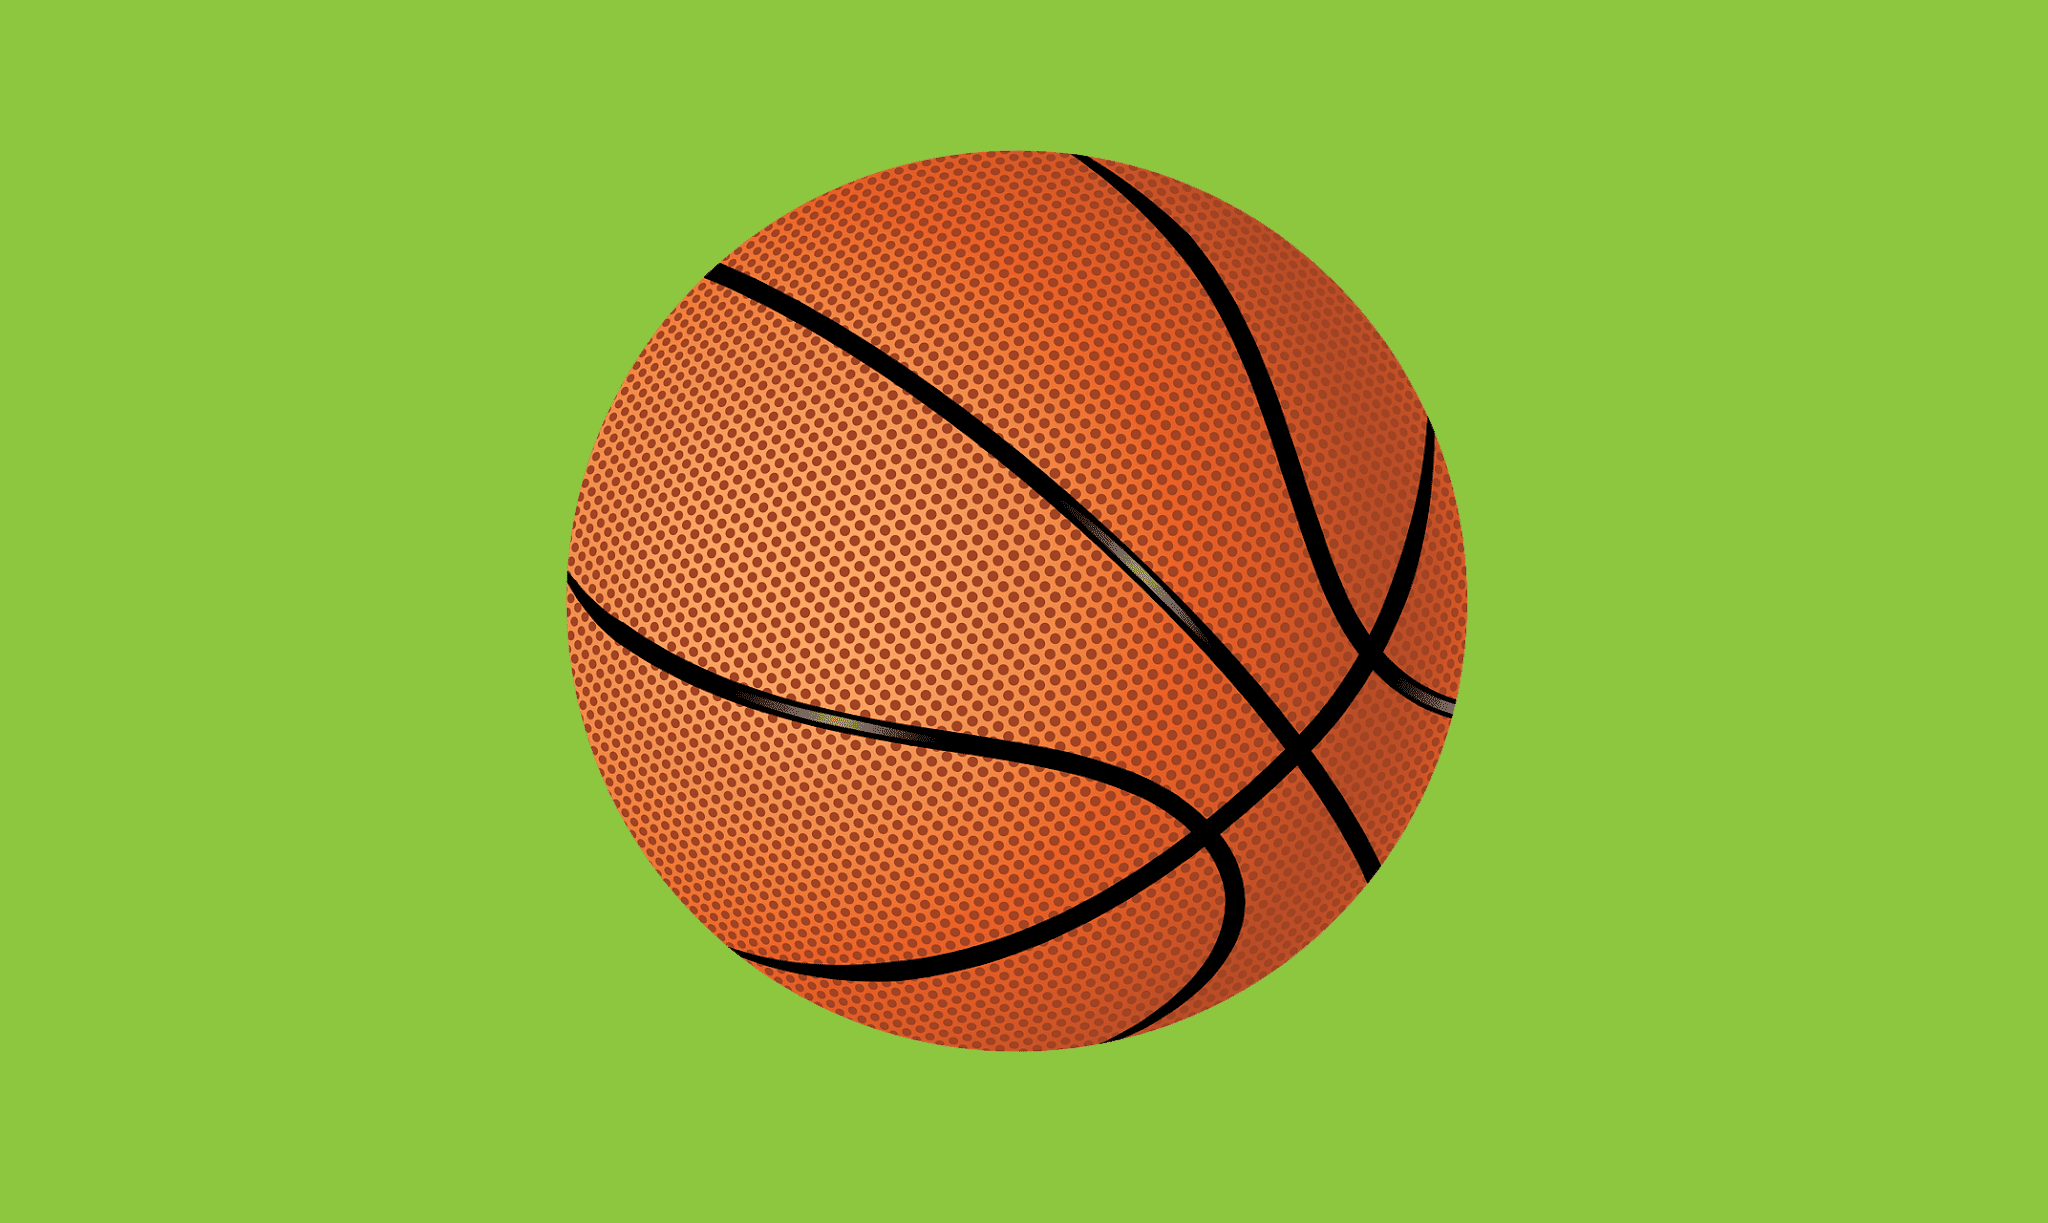 Soal Penjaskes Tentang Bola Basket Beserta Jawabannya - Guru Paud